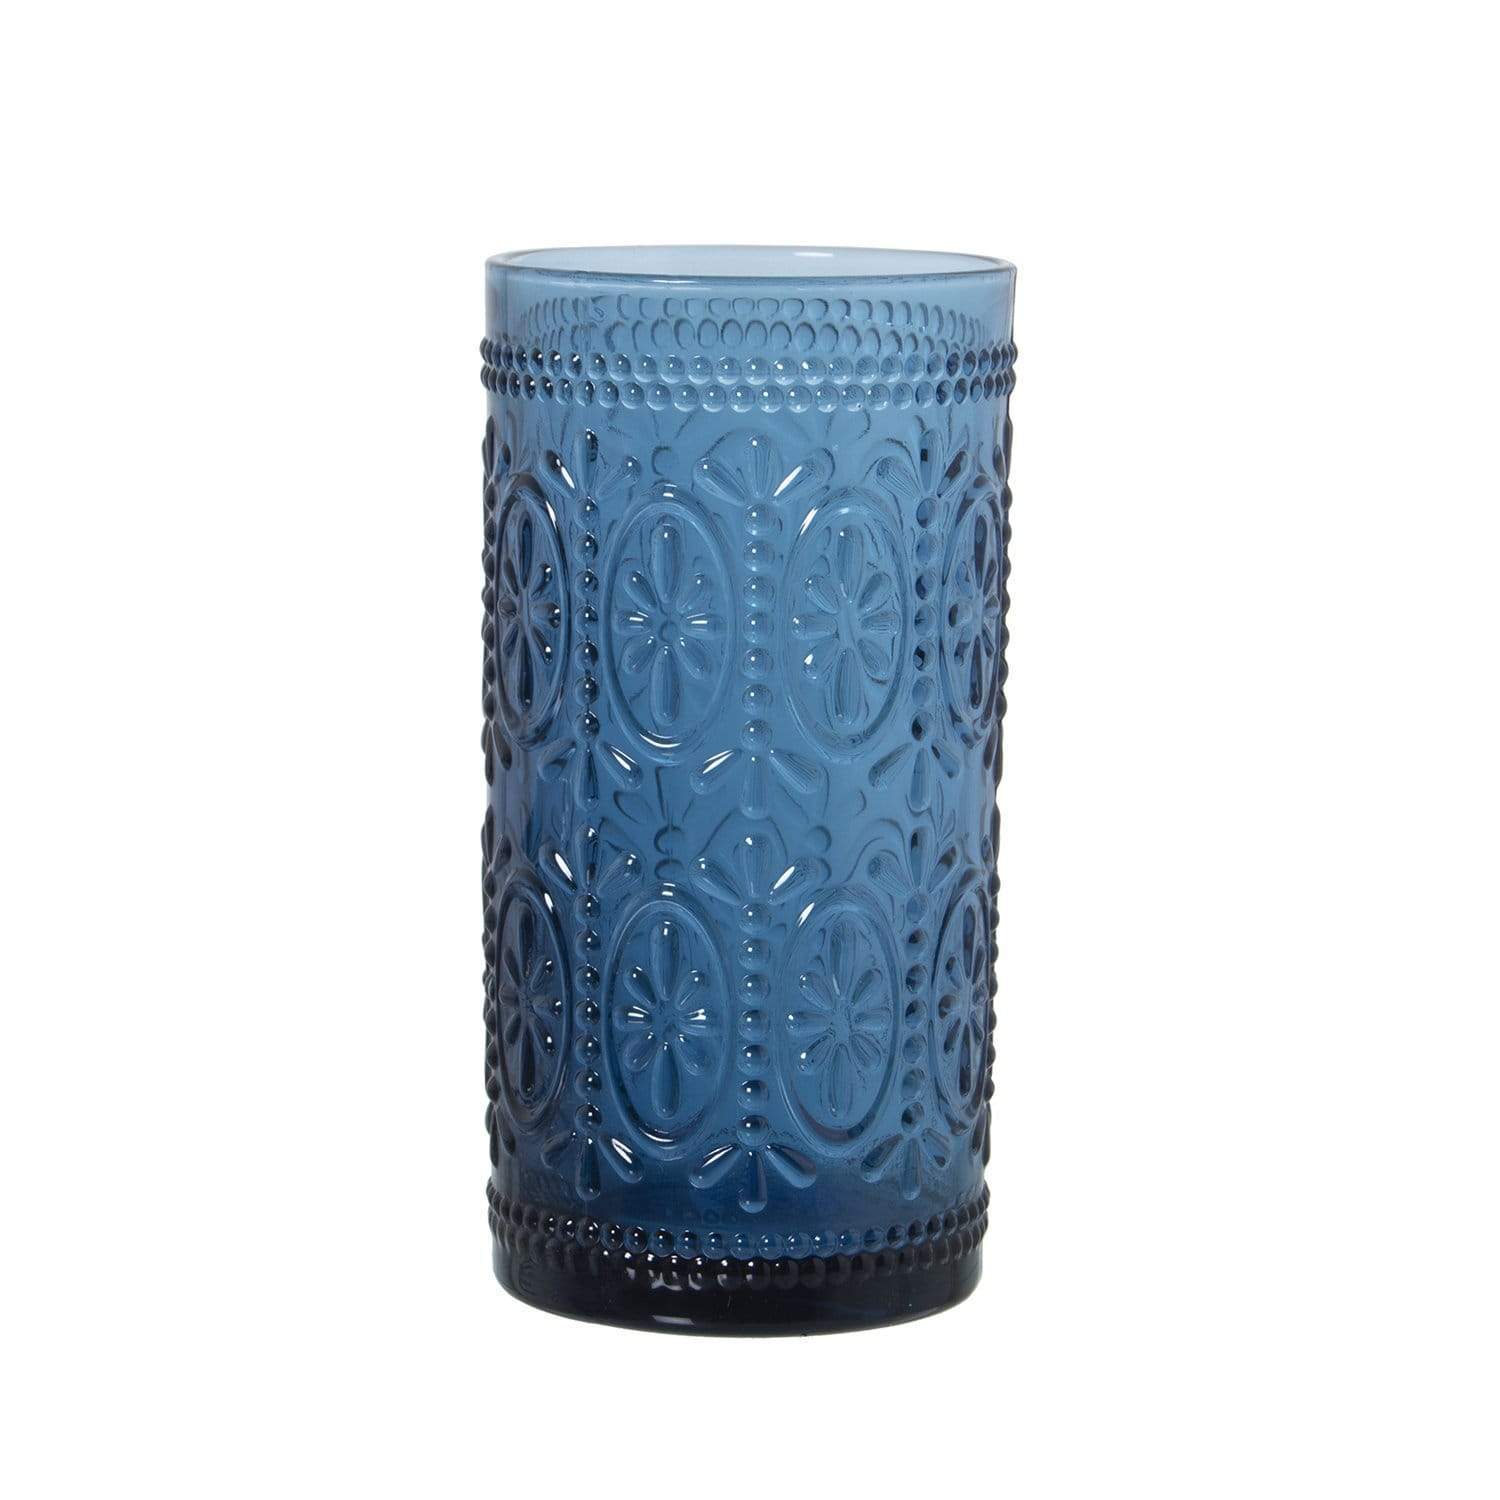 Lisbona set Bicchieri 6pz acqua in vetro colore blu - Dolci pensieri gift